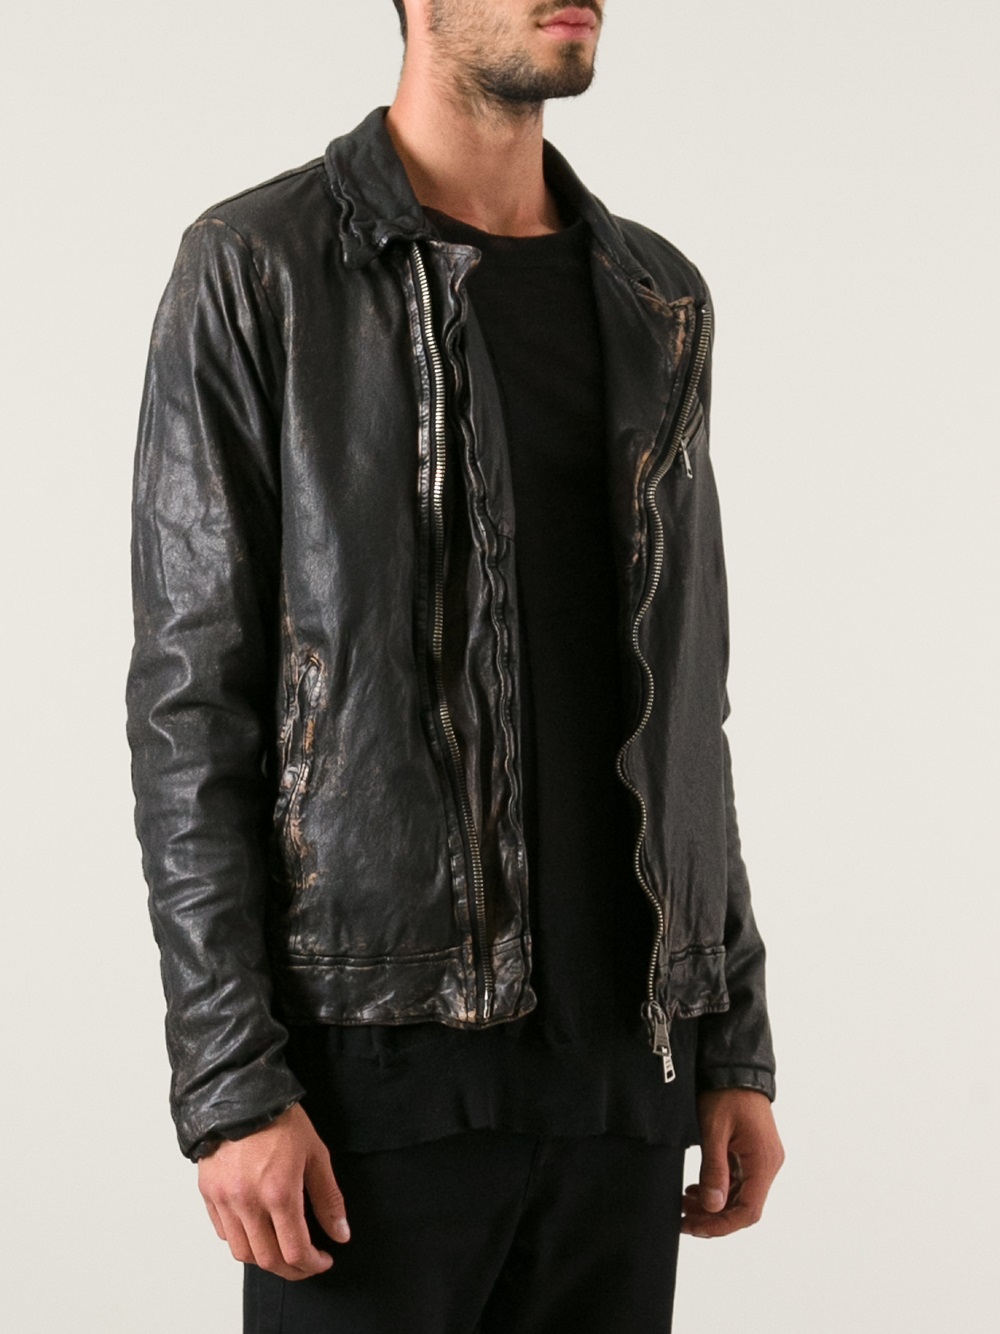 Lyst - Giorgio Brato Distressed Leather Jacket in Black for Men